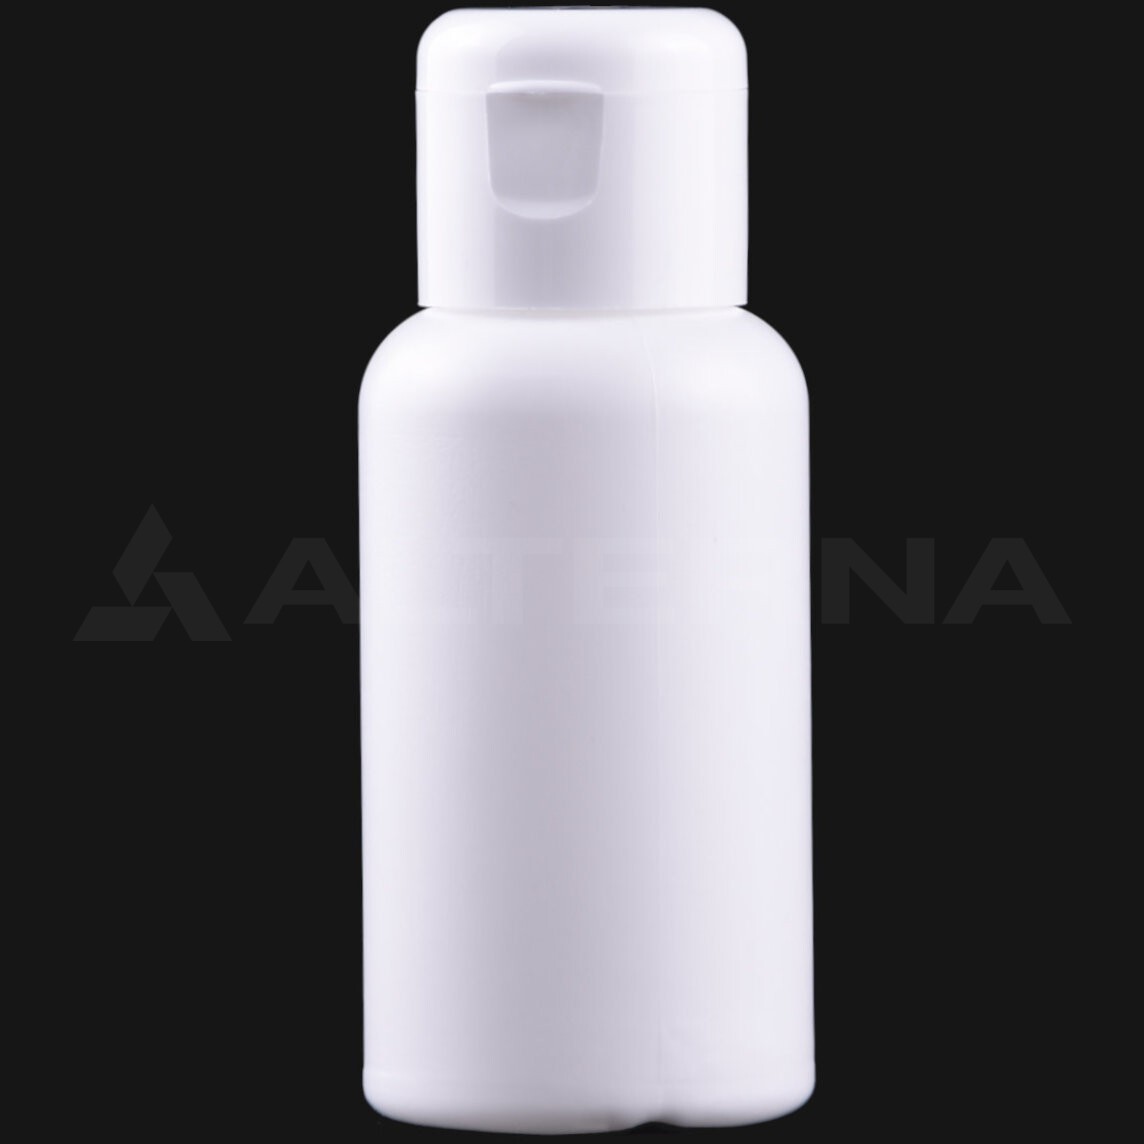 50 ml HDPE Bottle with 24 mm Flip Top Cap